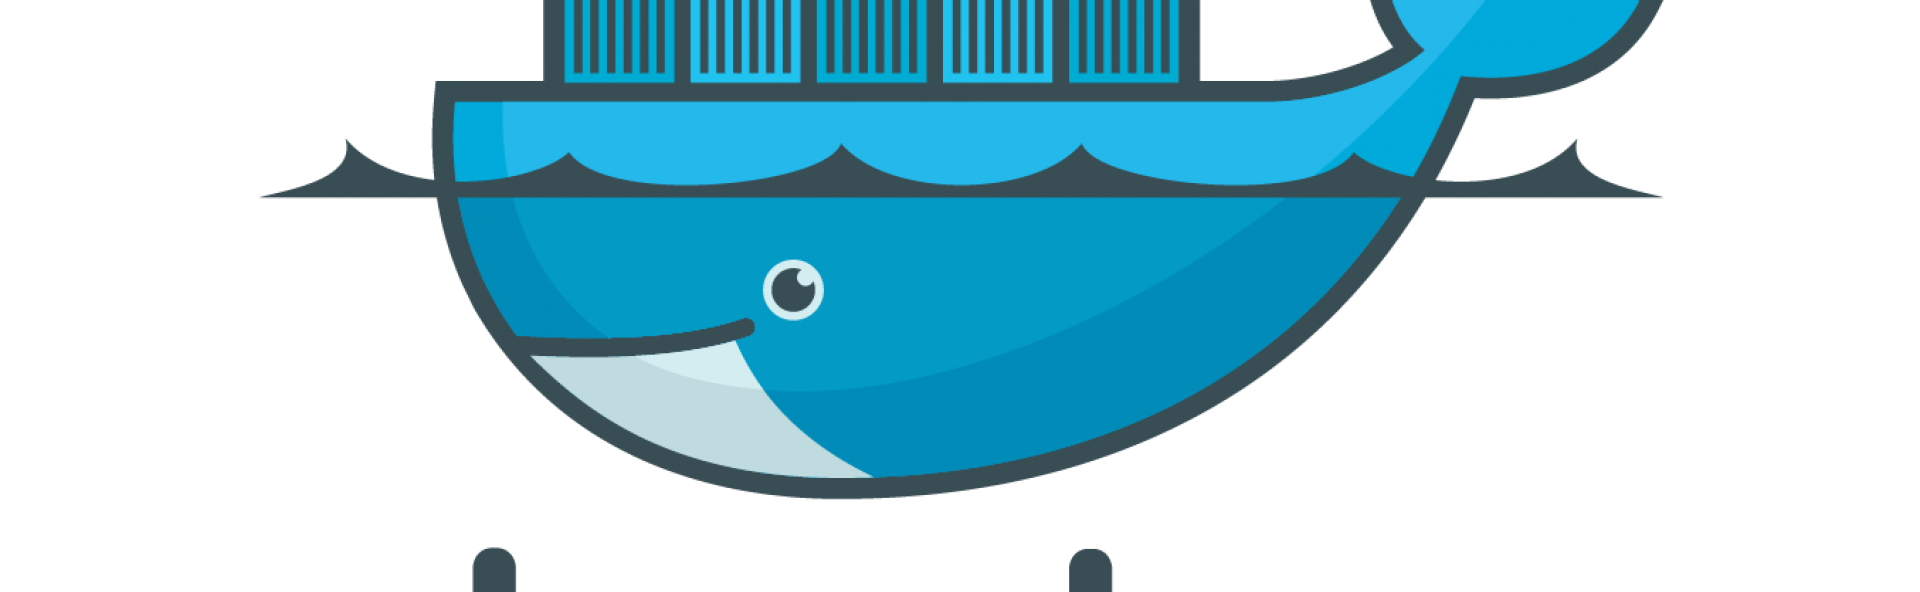 Docker Logo - Start your adventure with Docker-Console | Droptica Blog